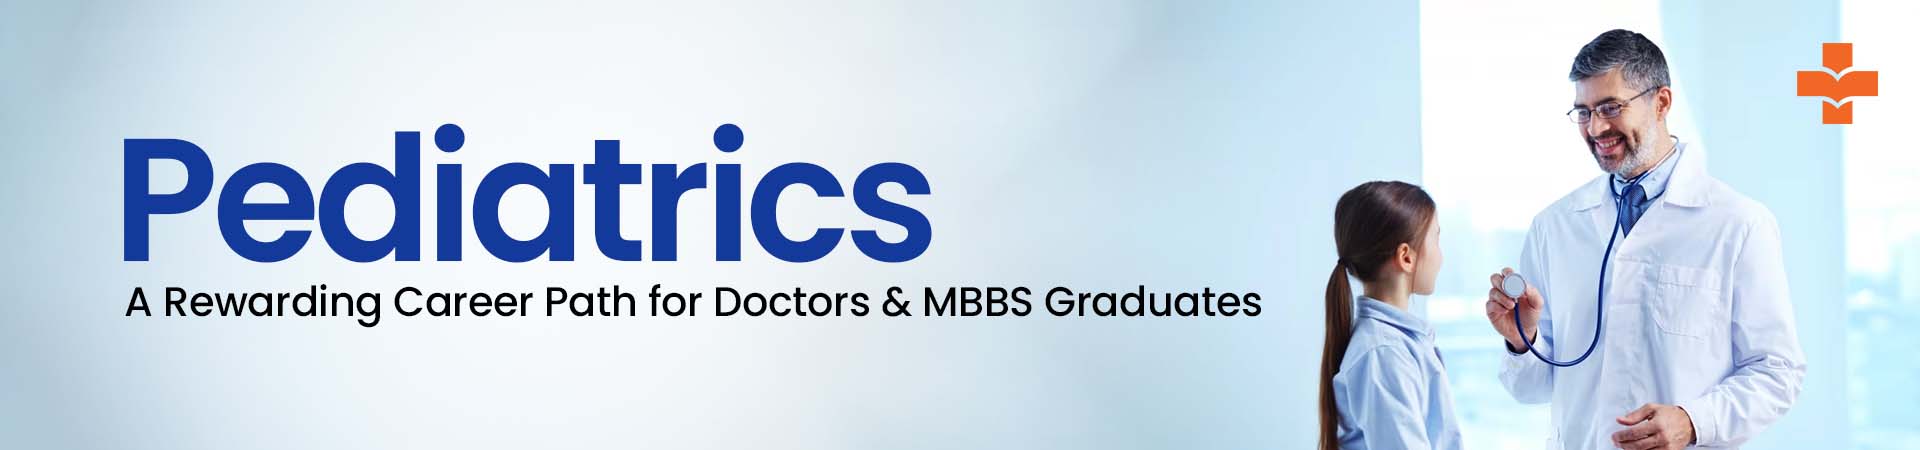 Explore the rewarding career path of Pediatrics for doctors and MBBS graduates.